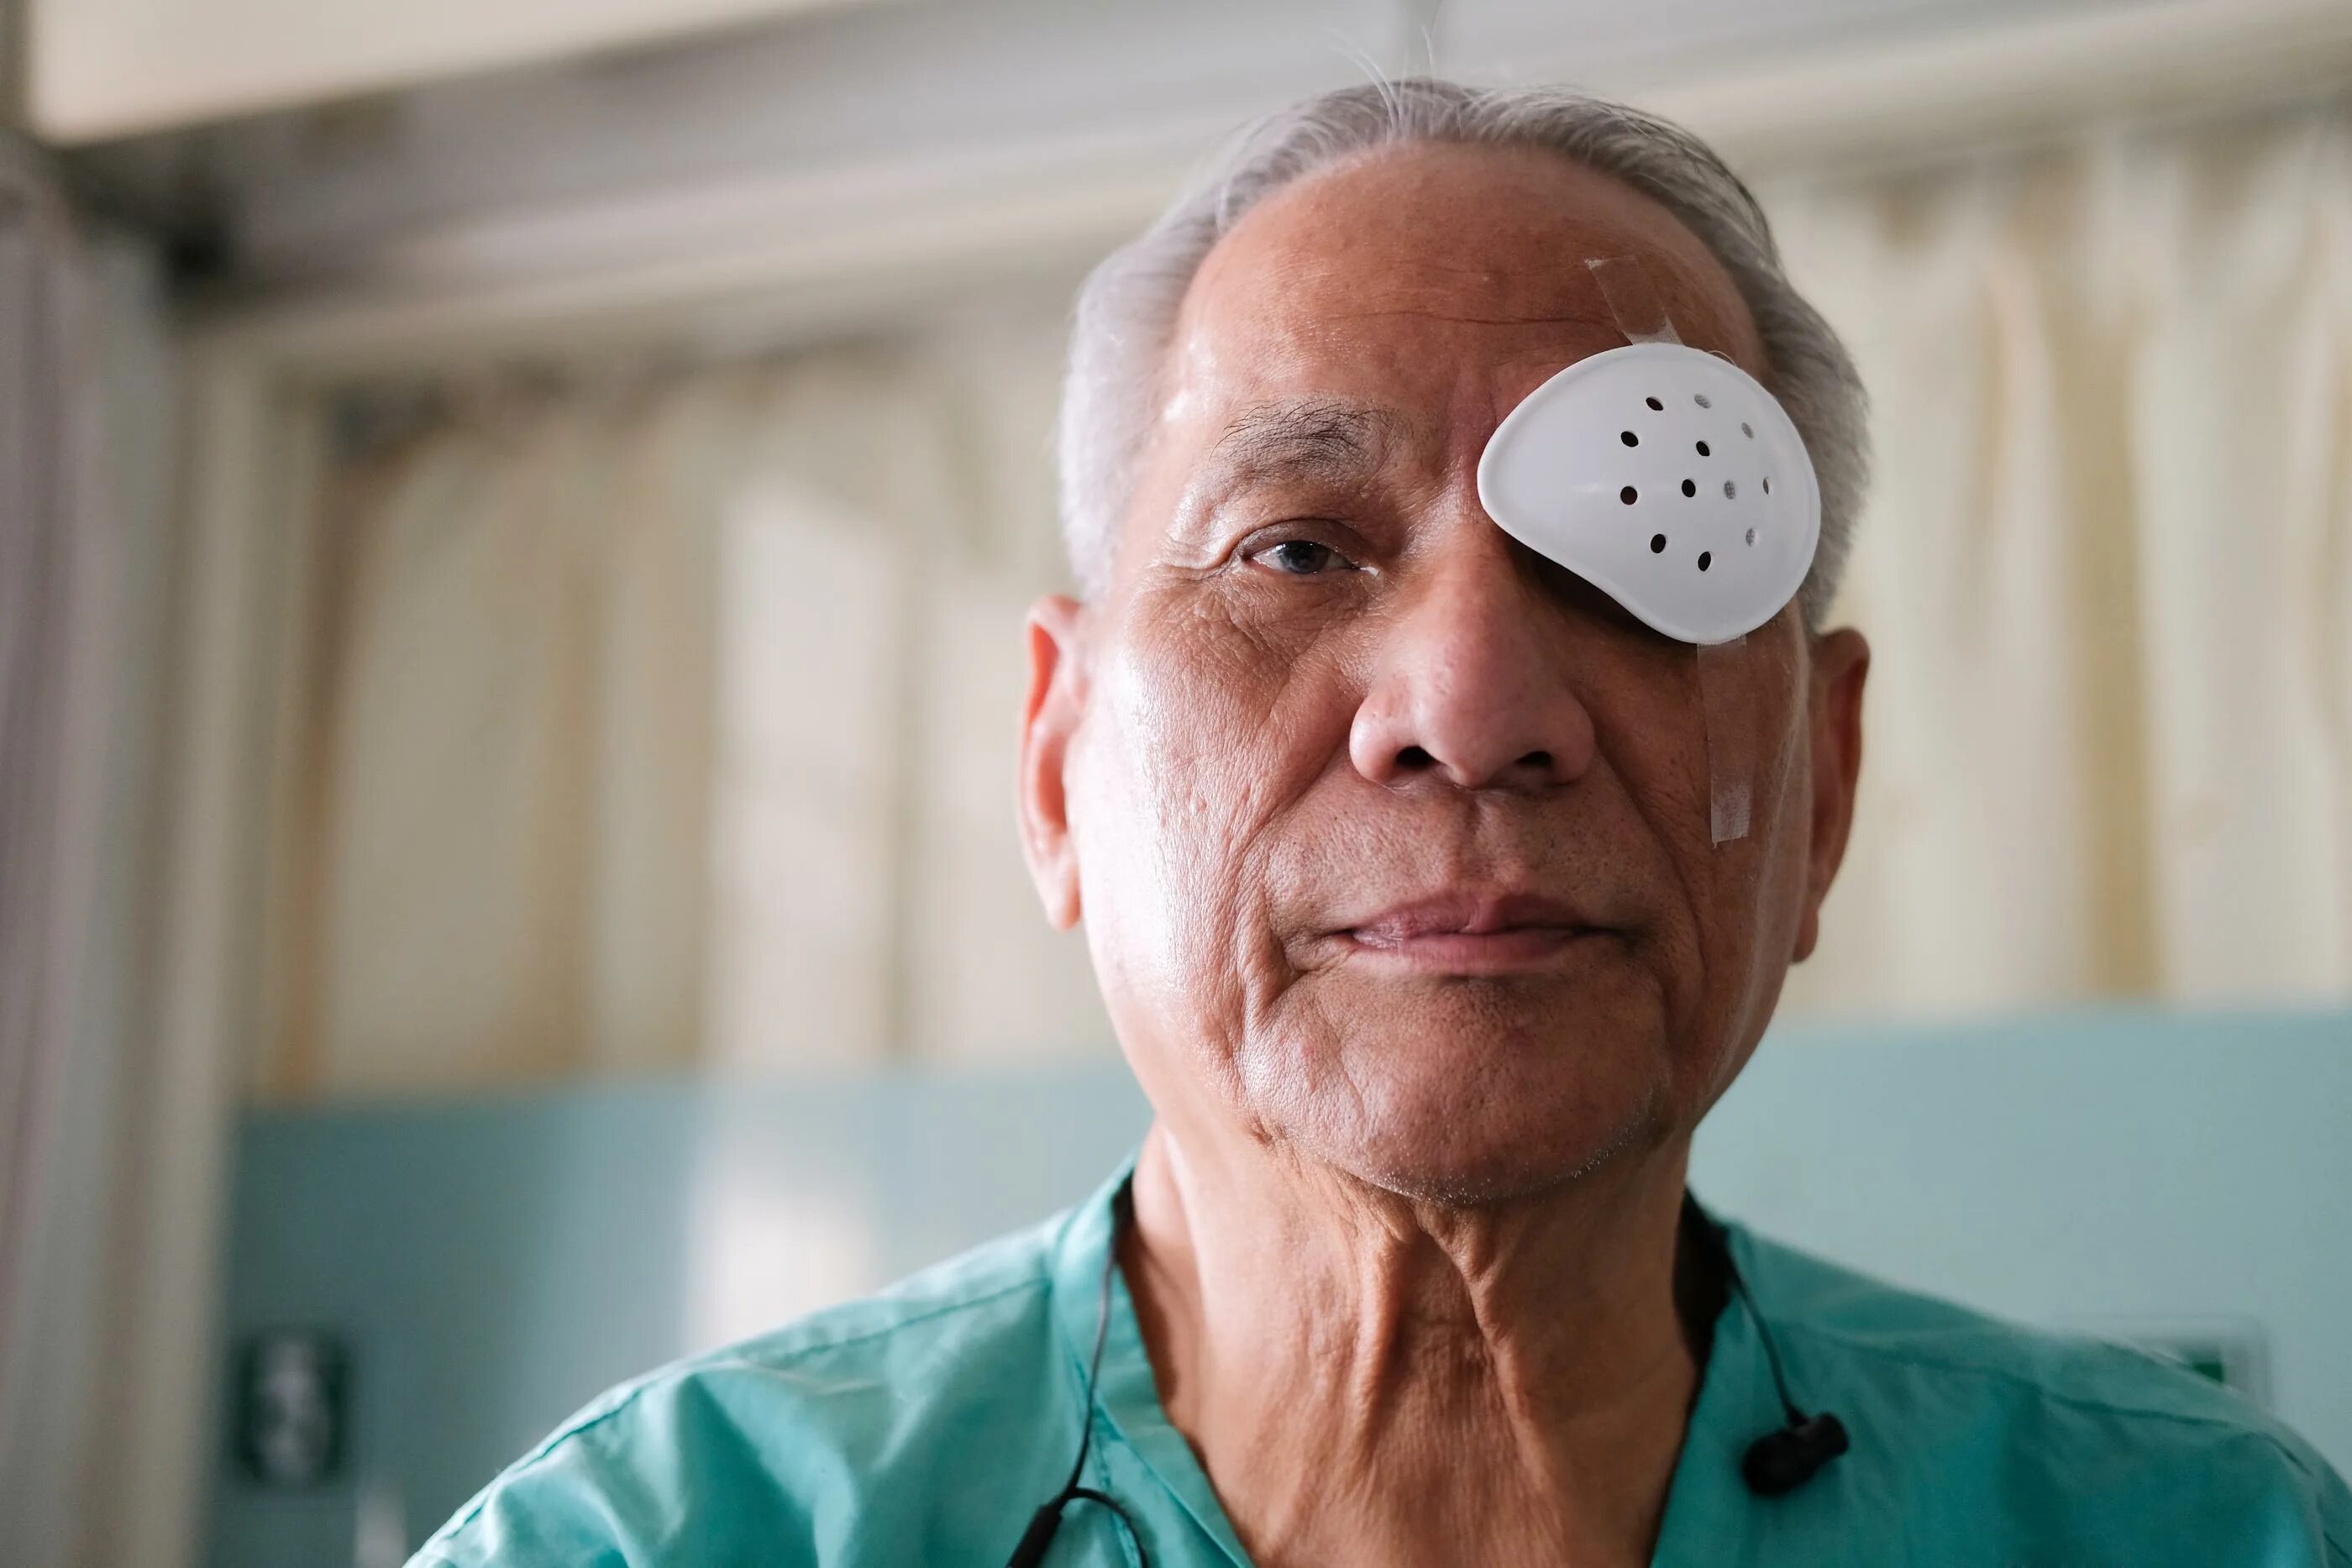 Катаракта операция после 70 лет. Фото старушки после операции на глаза. Ведение больных после операции по удалению катаракты 86 лет. Операция катаракты у пожилых людей цена. Лечение катаракты у пожилых людей операция